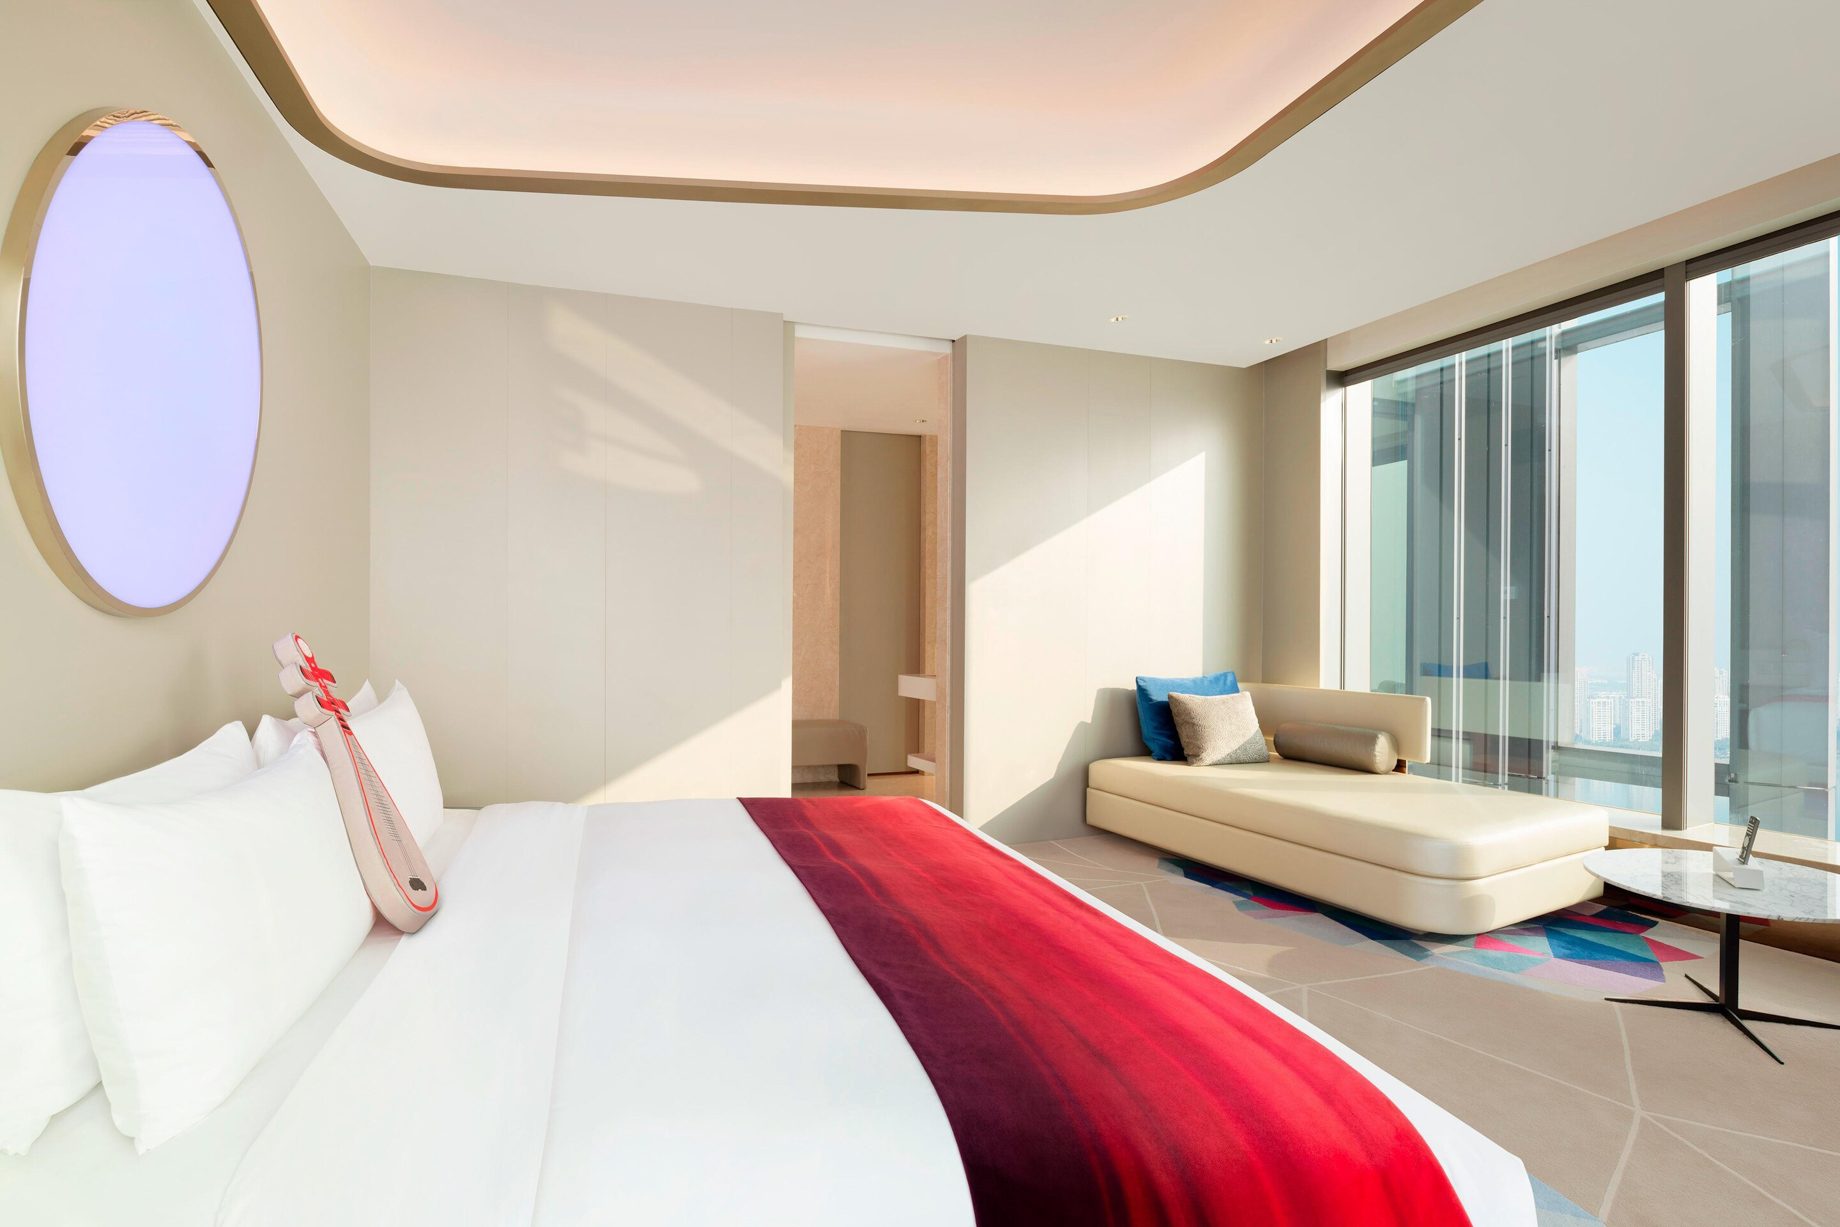 W Suzhou Hotel – Suzhou, China – Studio Suite King